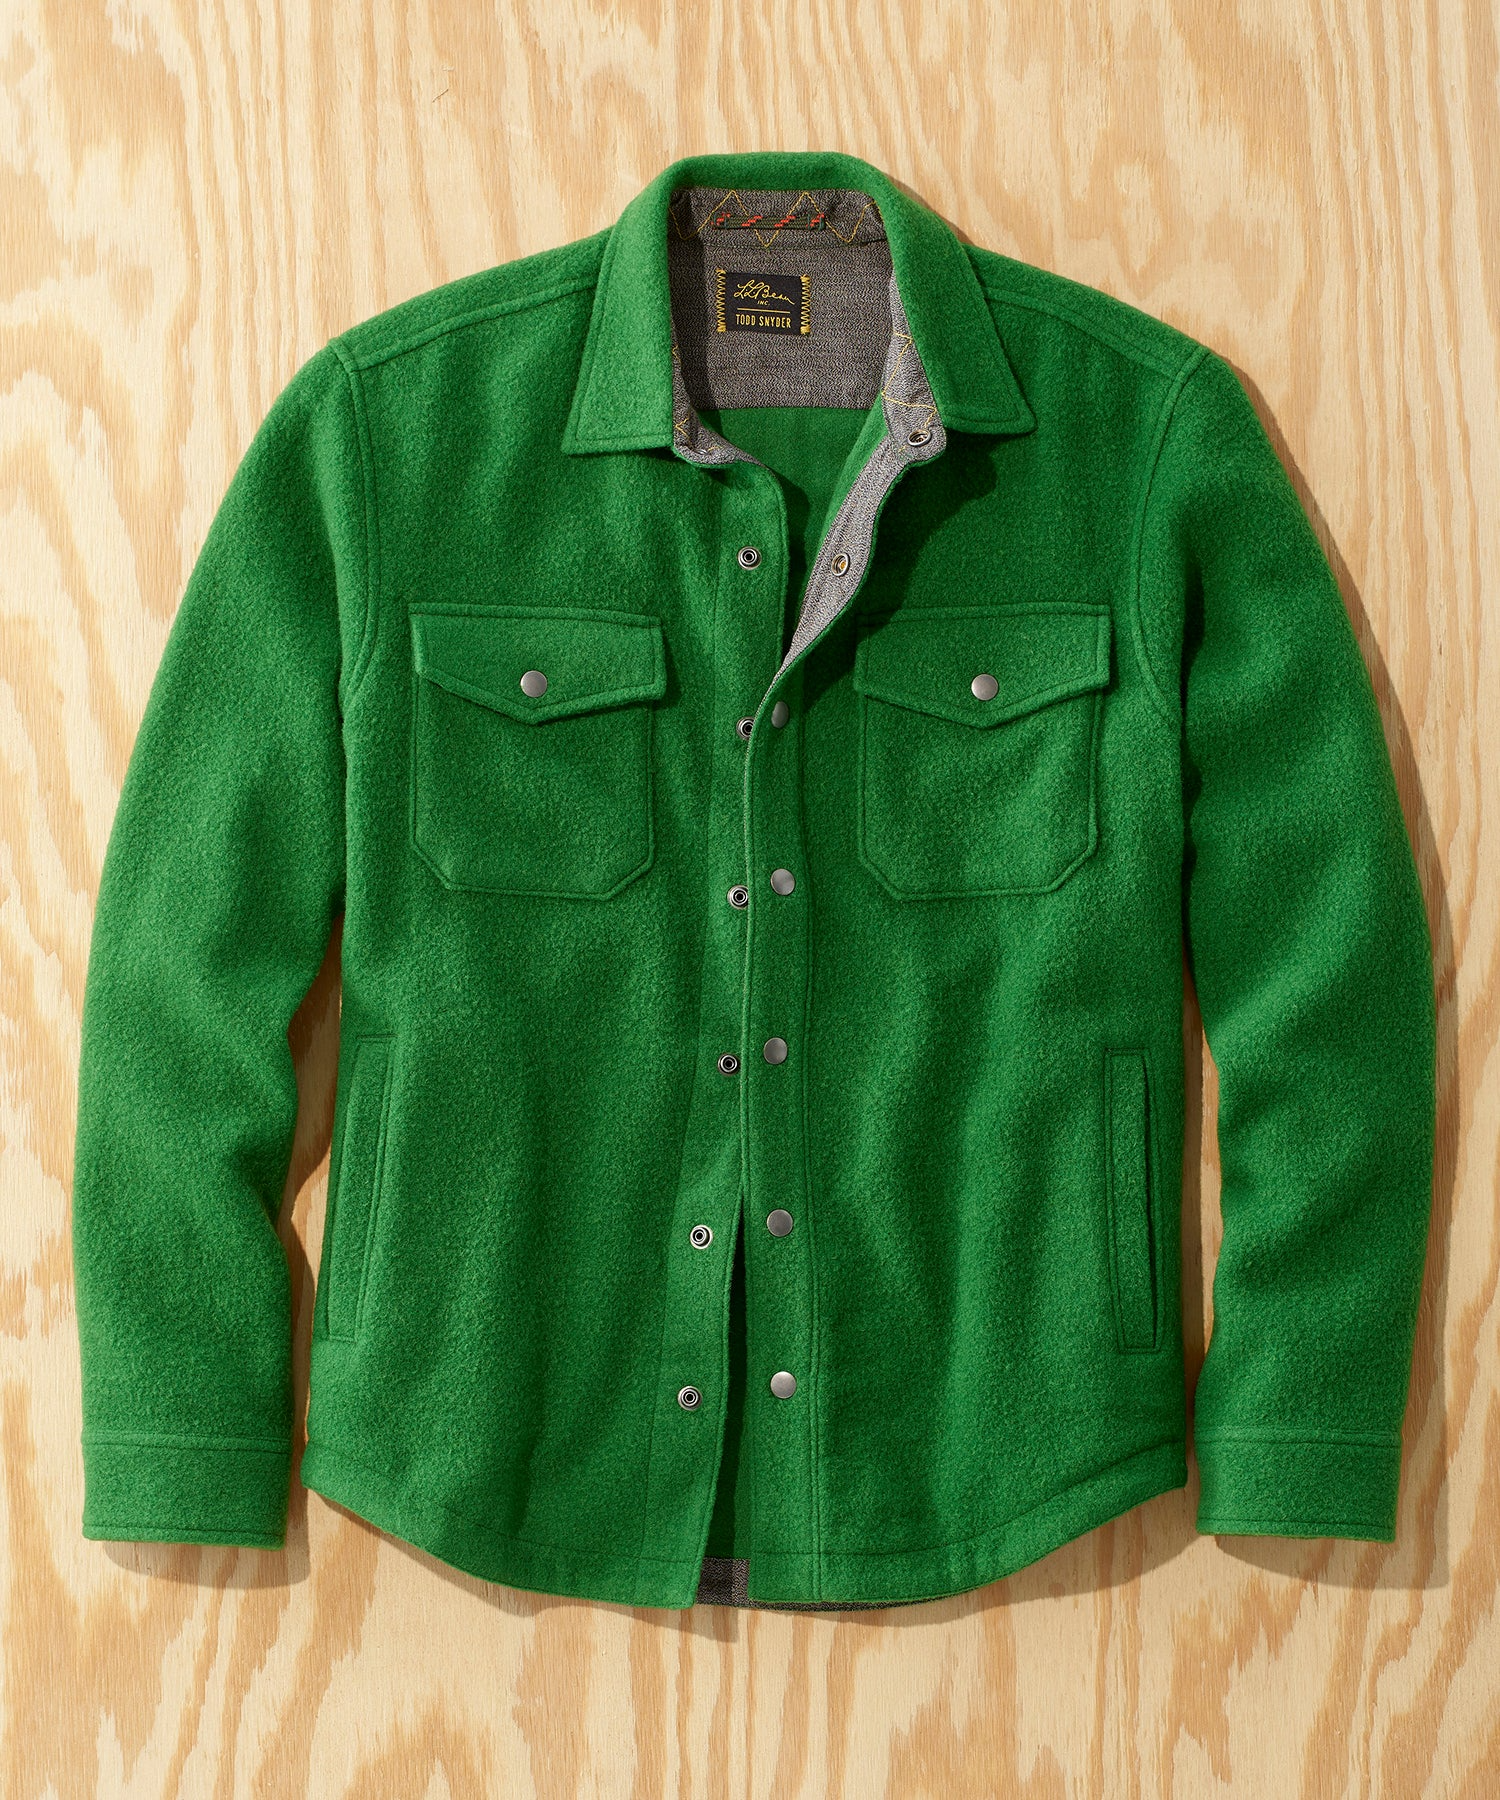 L.L.Bean x Todd Snyder Wool Blend Shirt Jacket